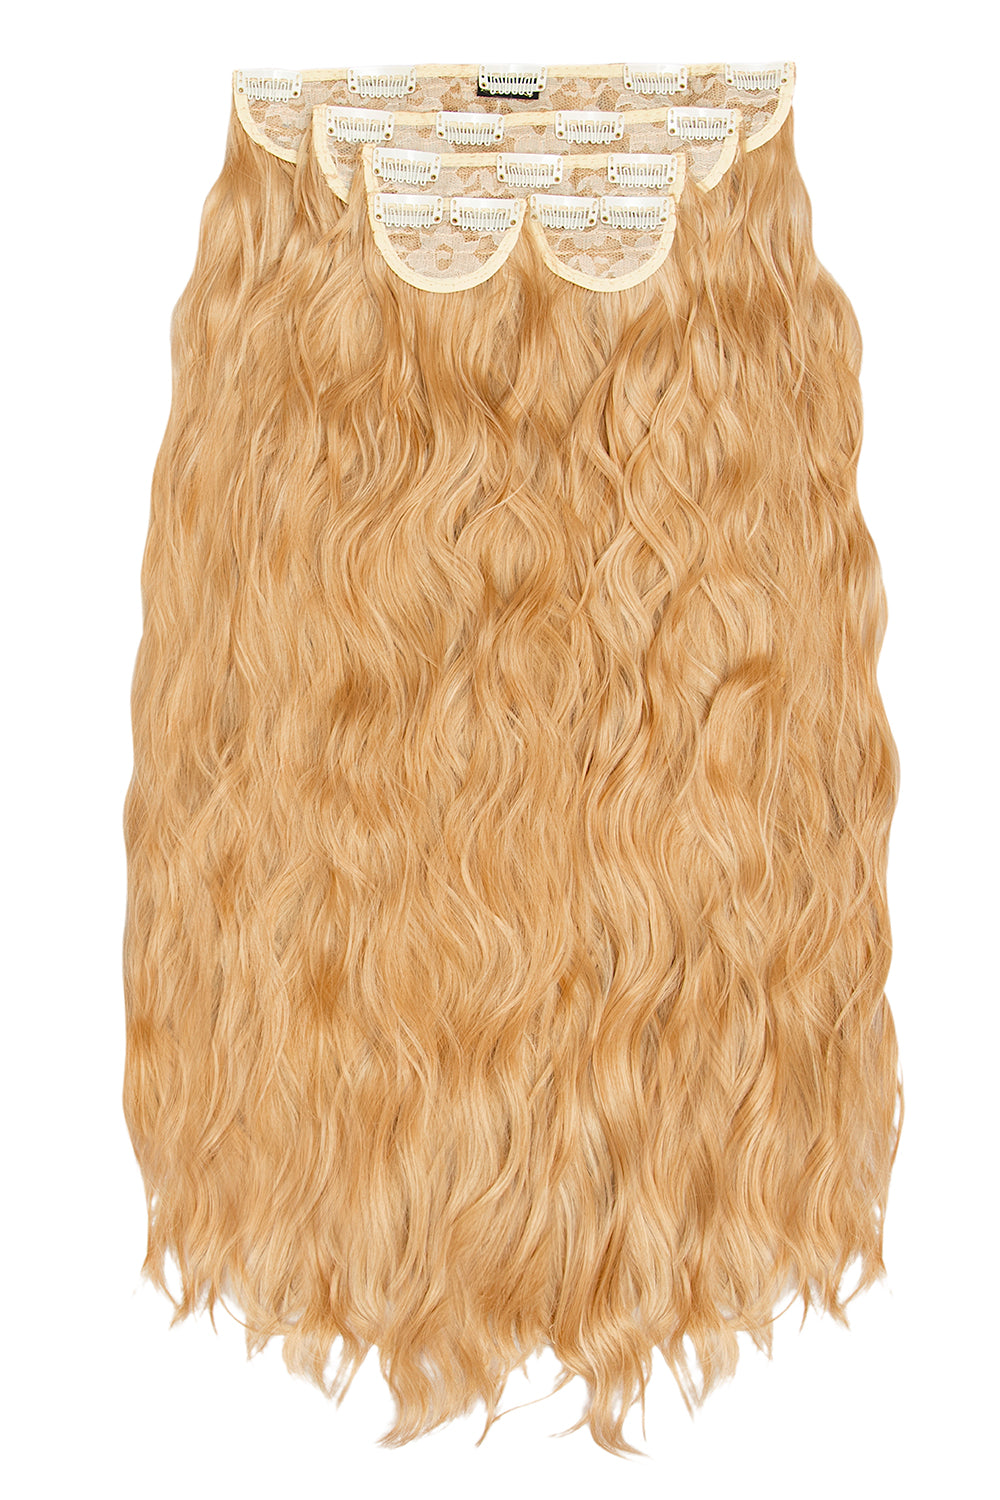 Super Thick 26" 5 Piece Waist Length Wave Clip In Hair Extensions - LullaBellz  - Caramel Blonde